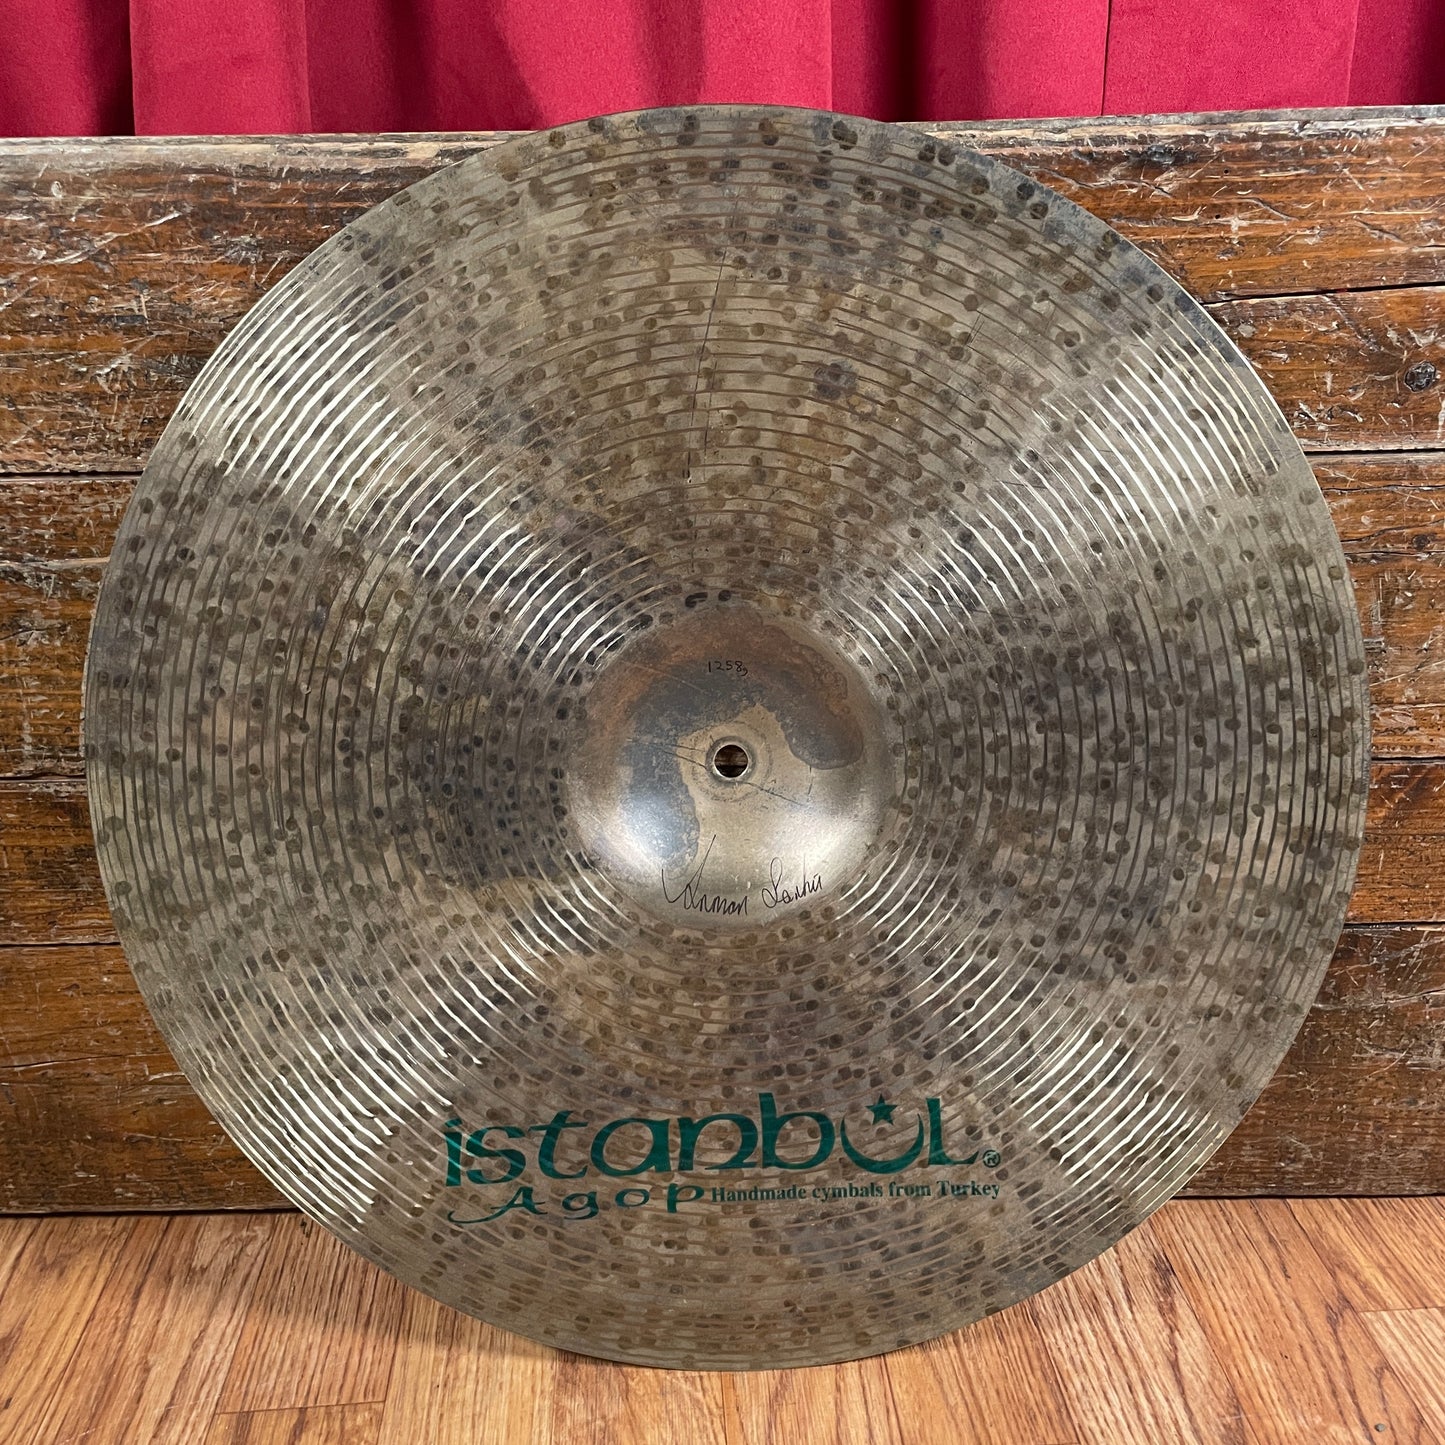 18" Istanbul Agop Signature Crash Cymbal 1258g *Video Demo*